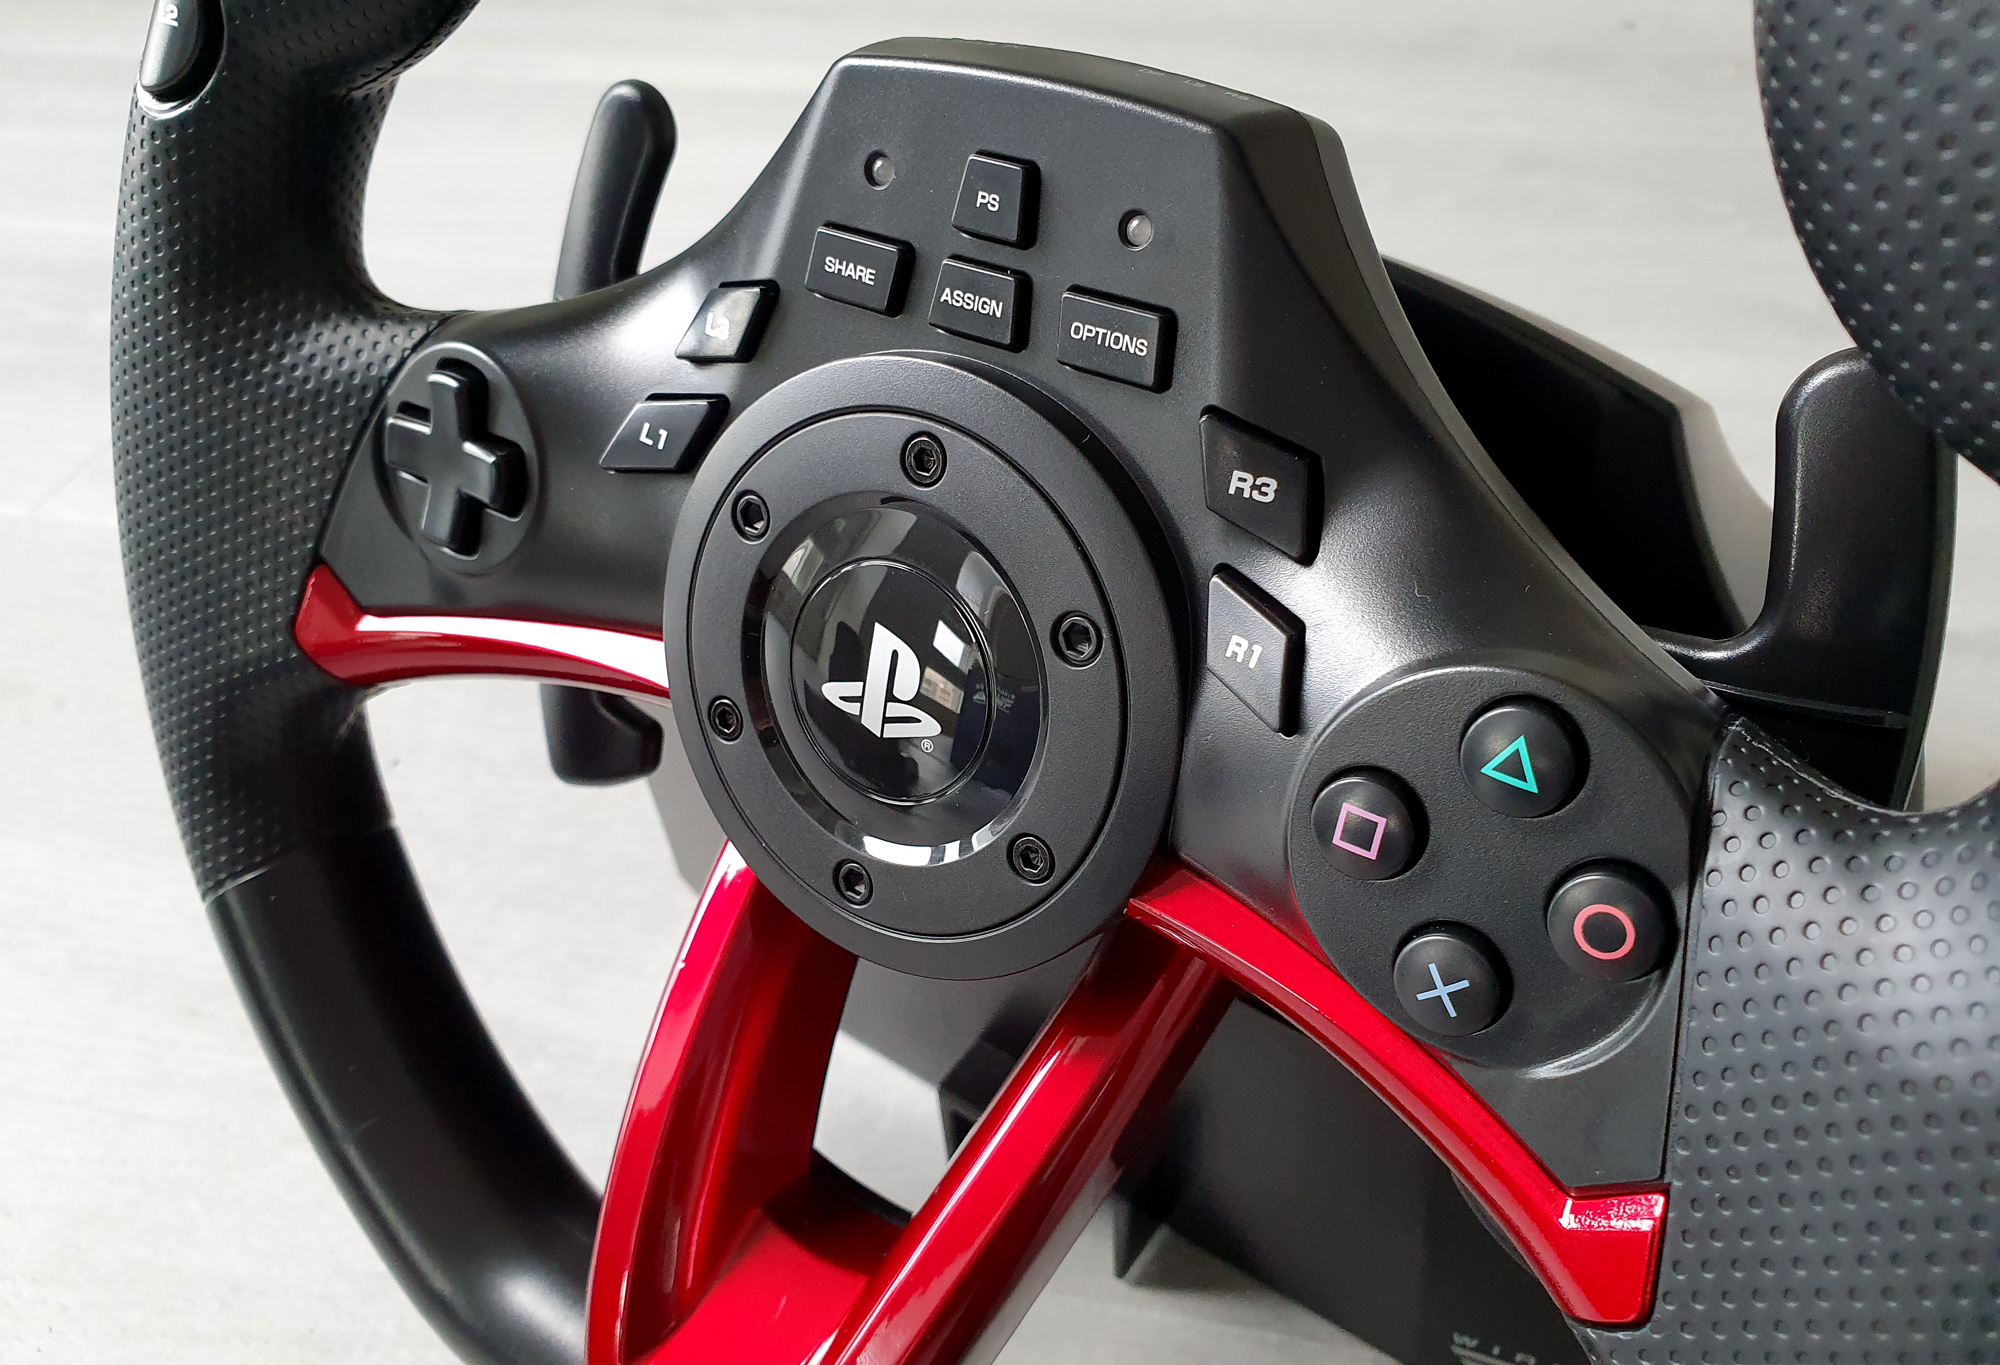 hori racing wheel apex for ps4 wireless bluetooth